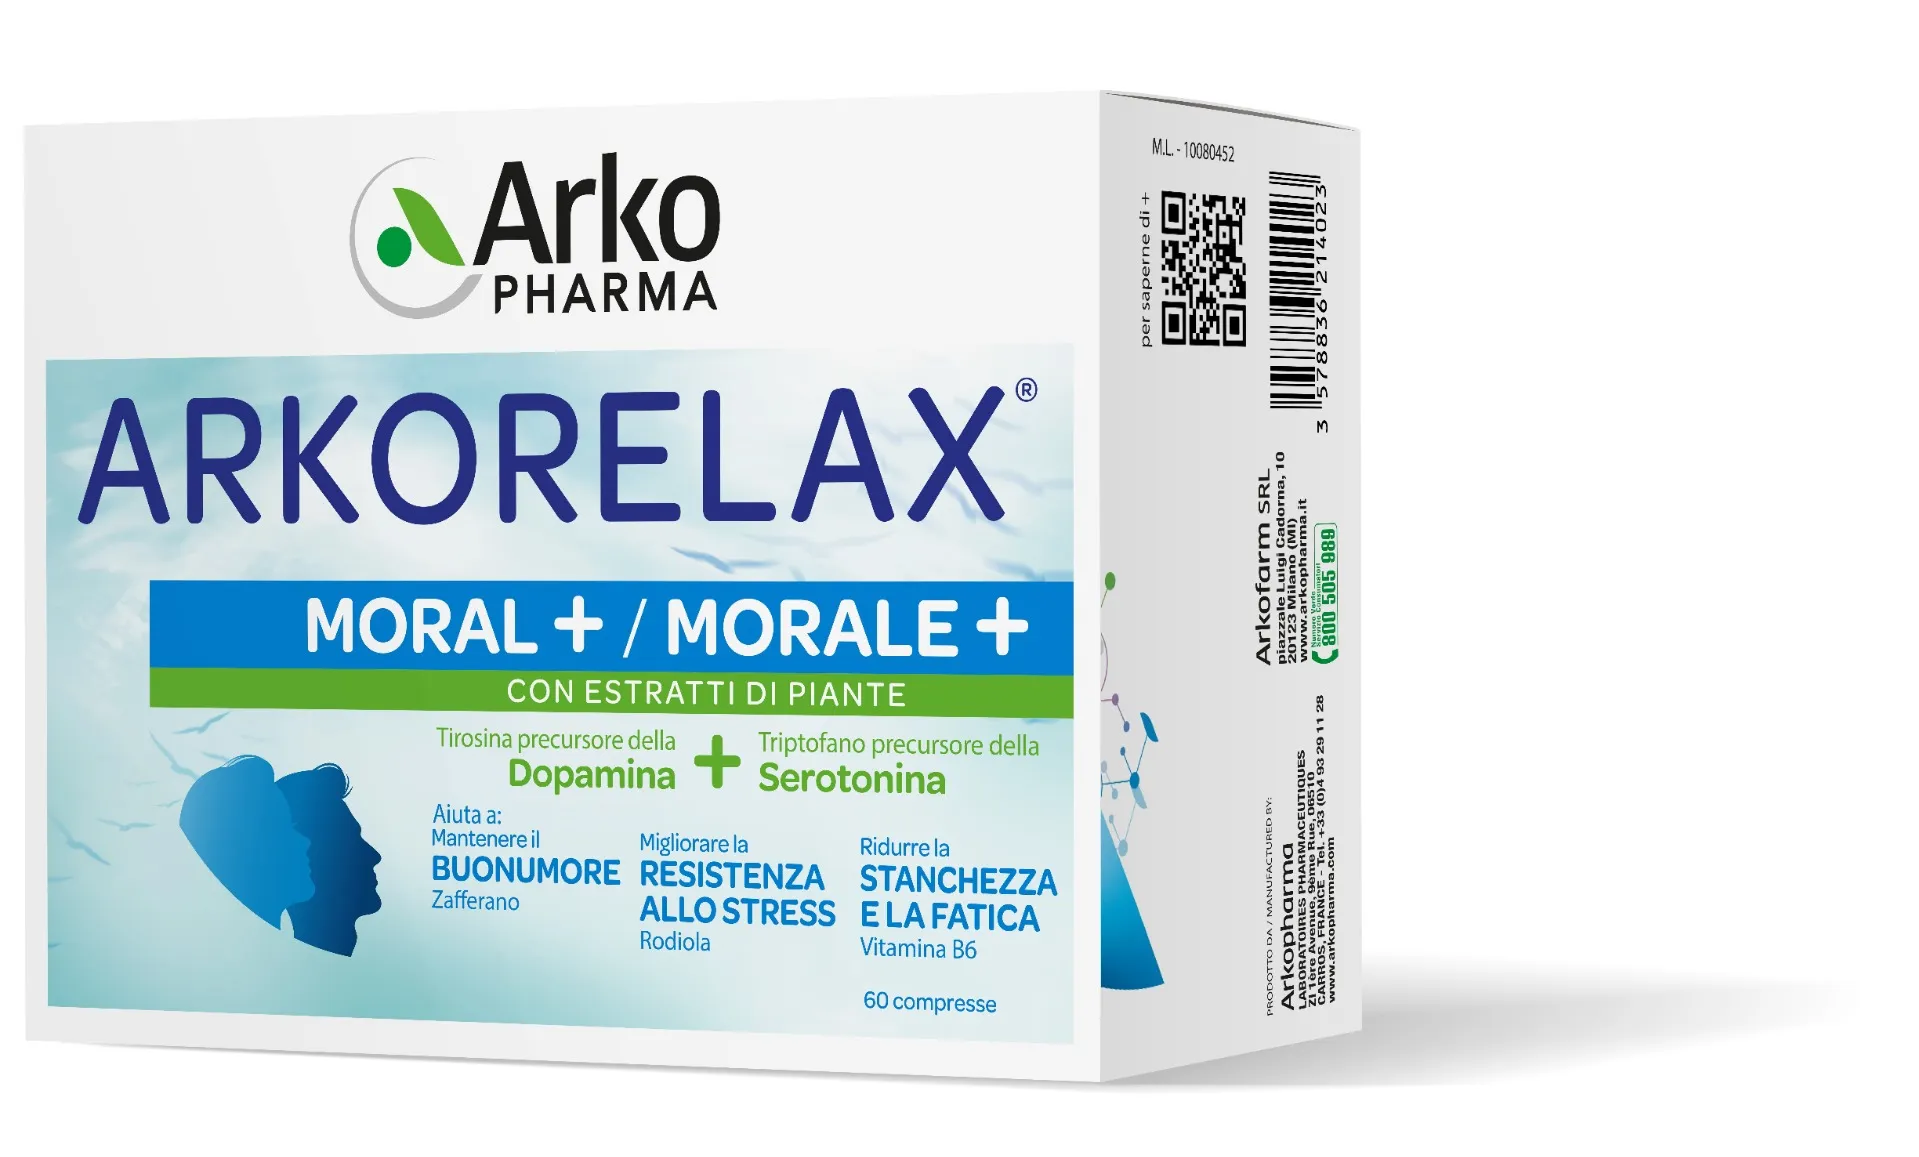 ARKOPHARMA ARKORELAX® MORAL + 60 CAPSULE